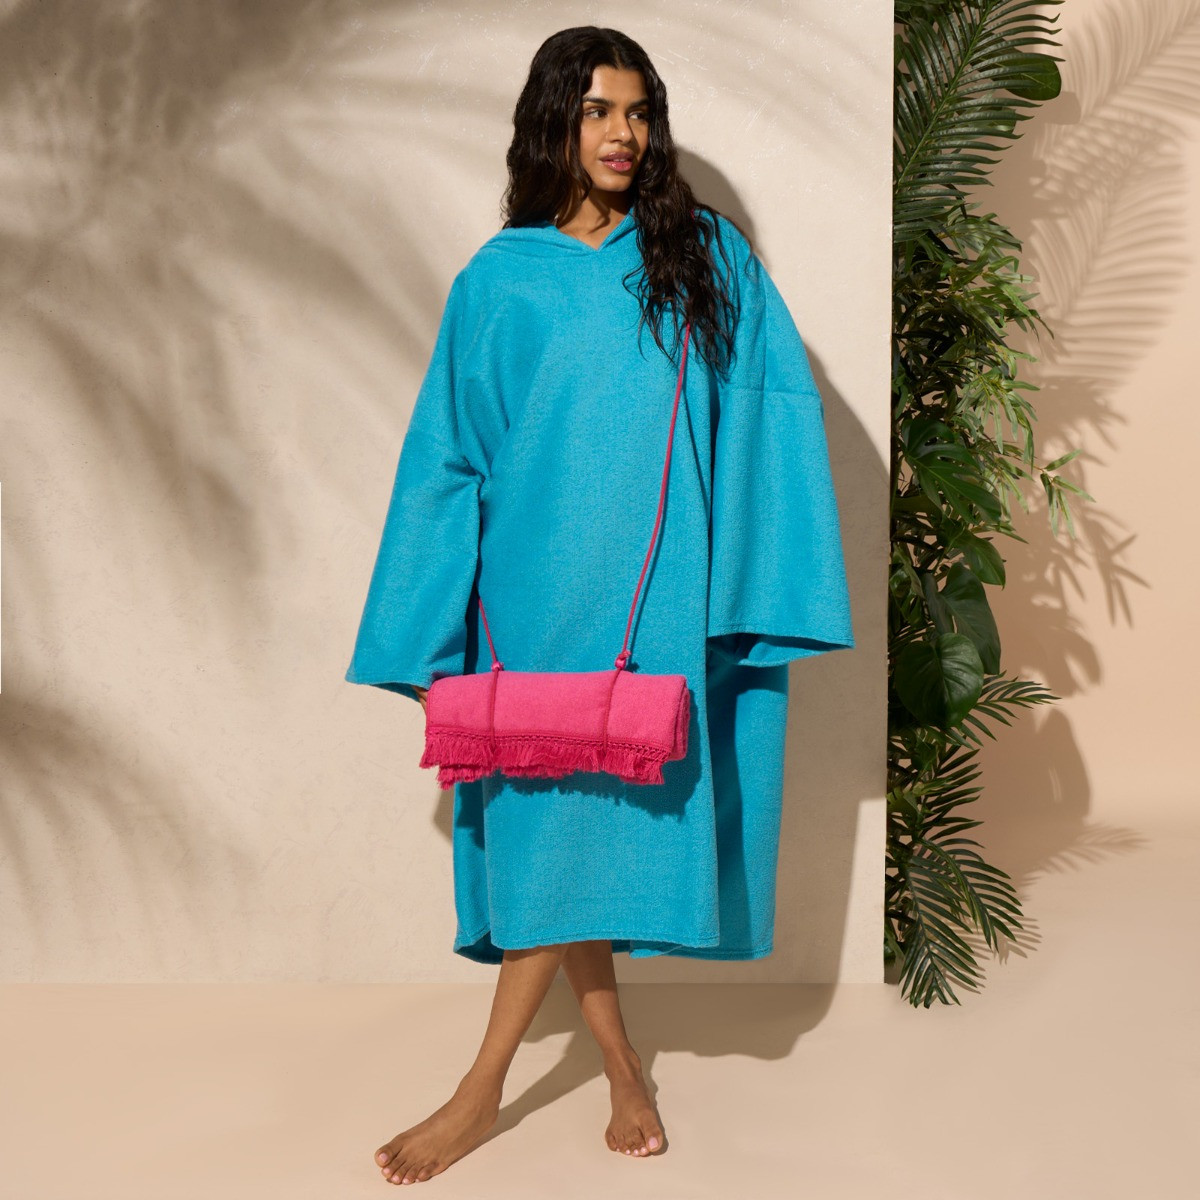 Sienna Tassel Beach Towel Bag - Fuchsia Pink>